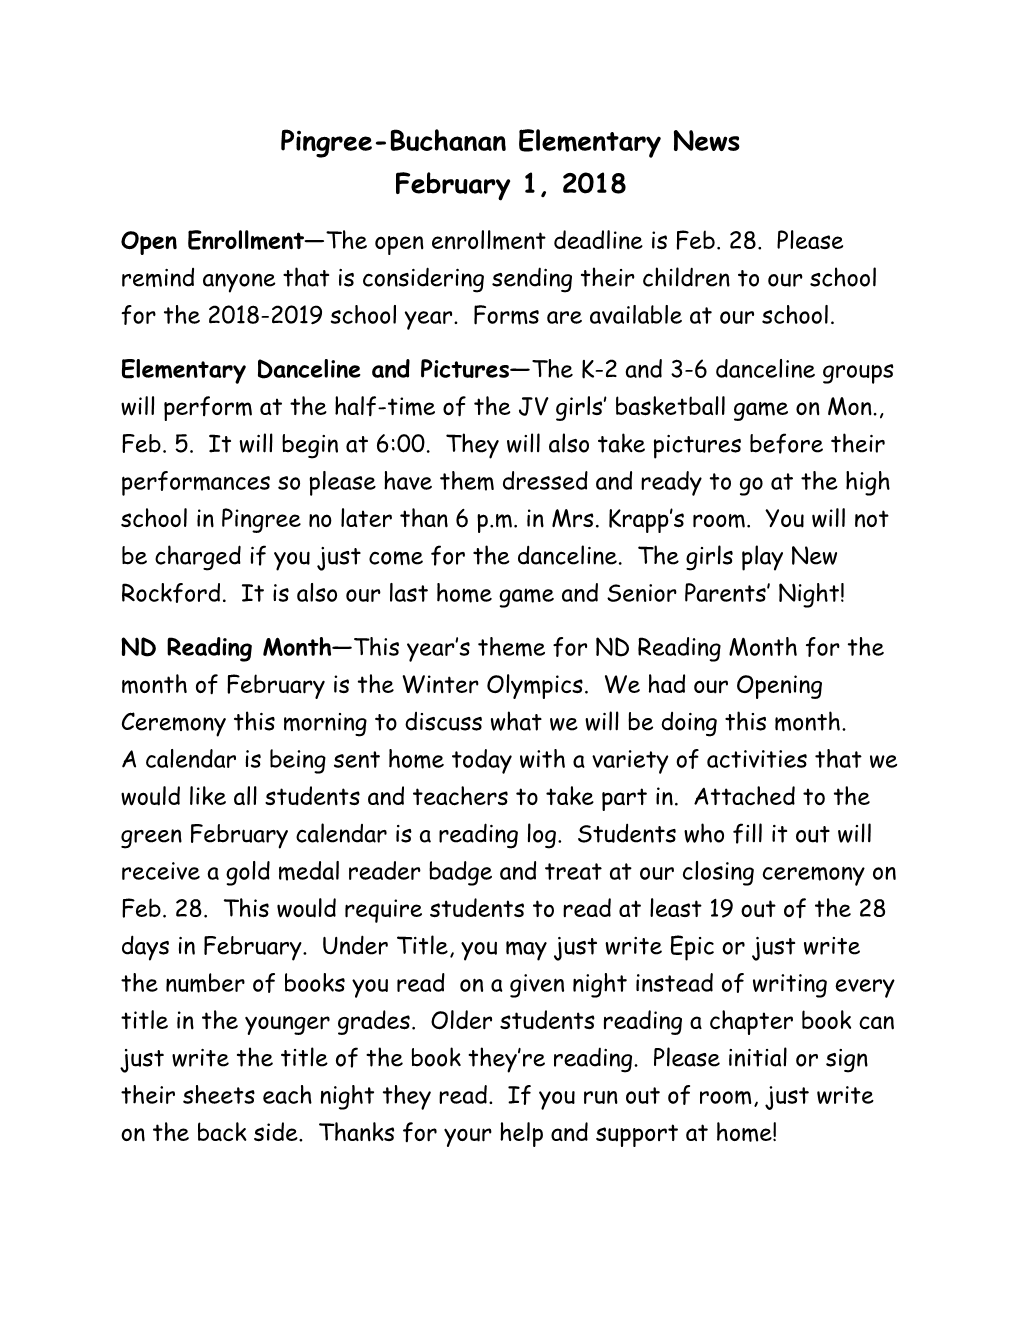 Pingree-Buchanan Elementary News February 1, 2018